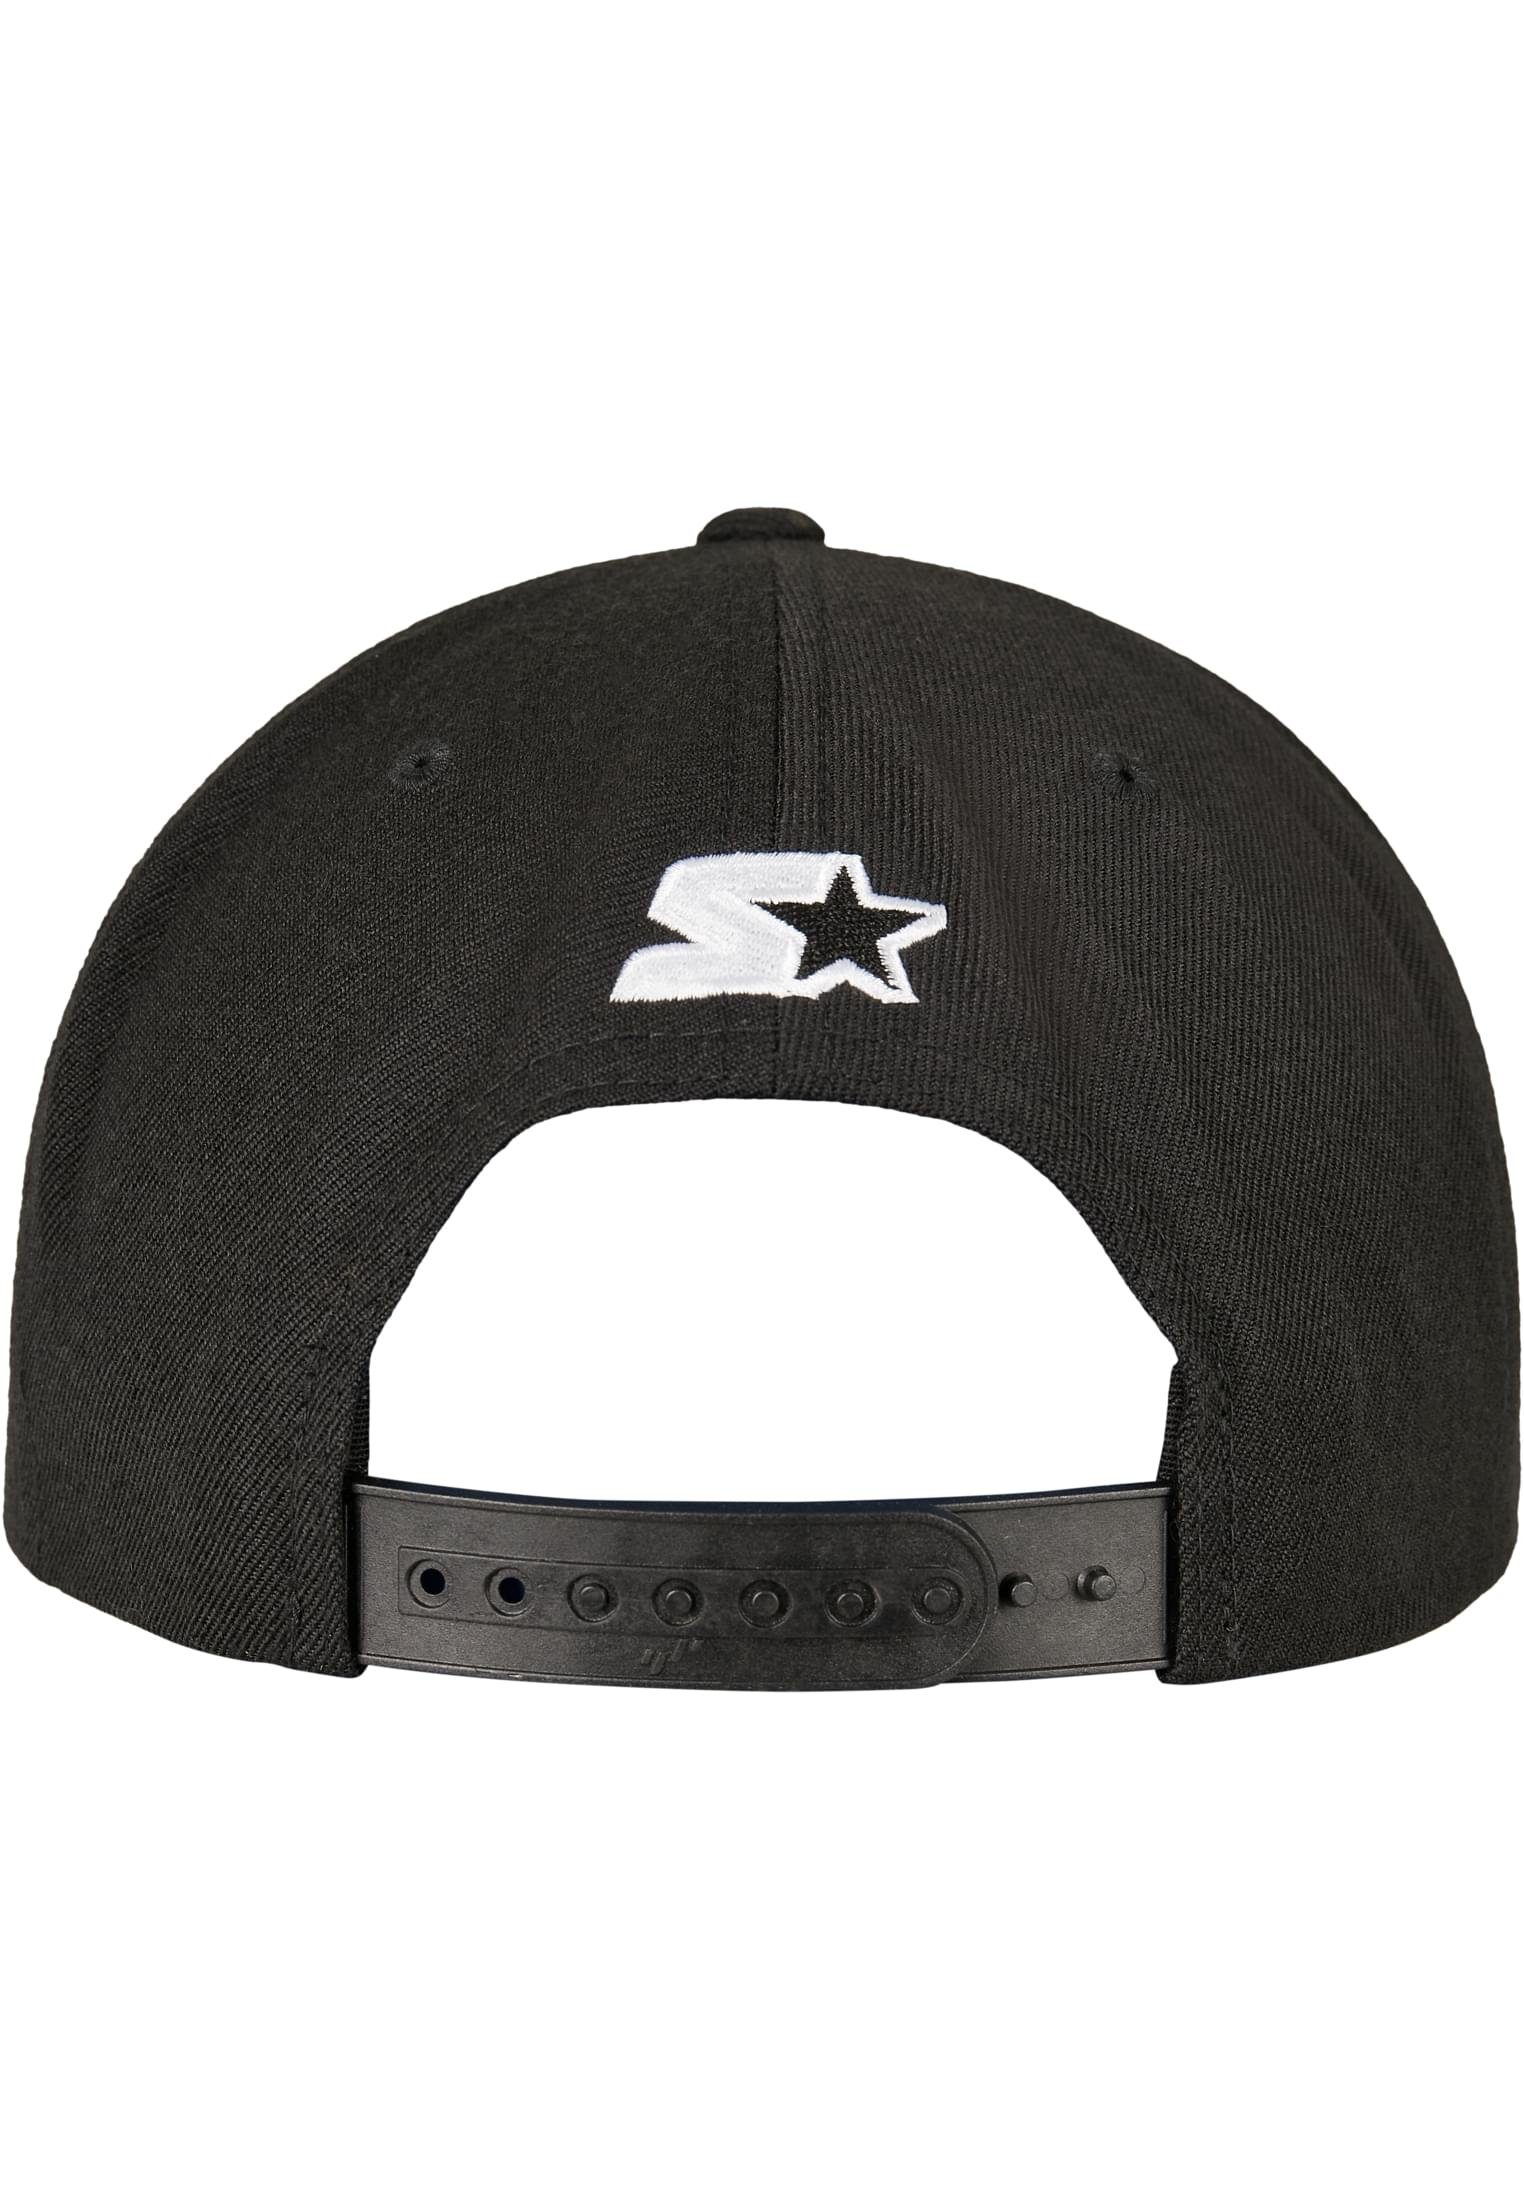 Black Label Cap Logo Flex Starter Starter Accessoires Snapback